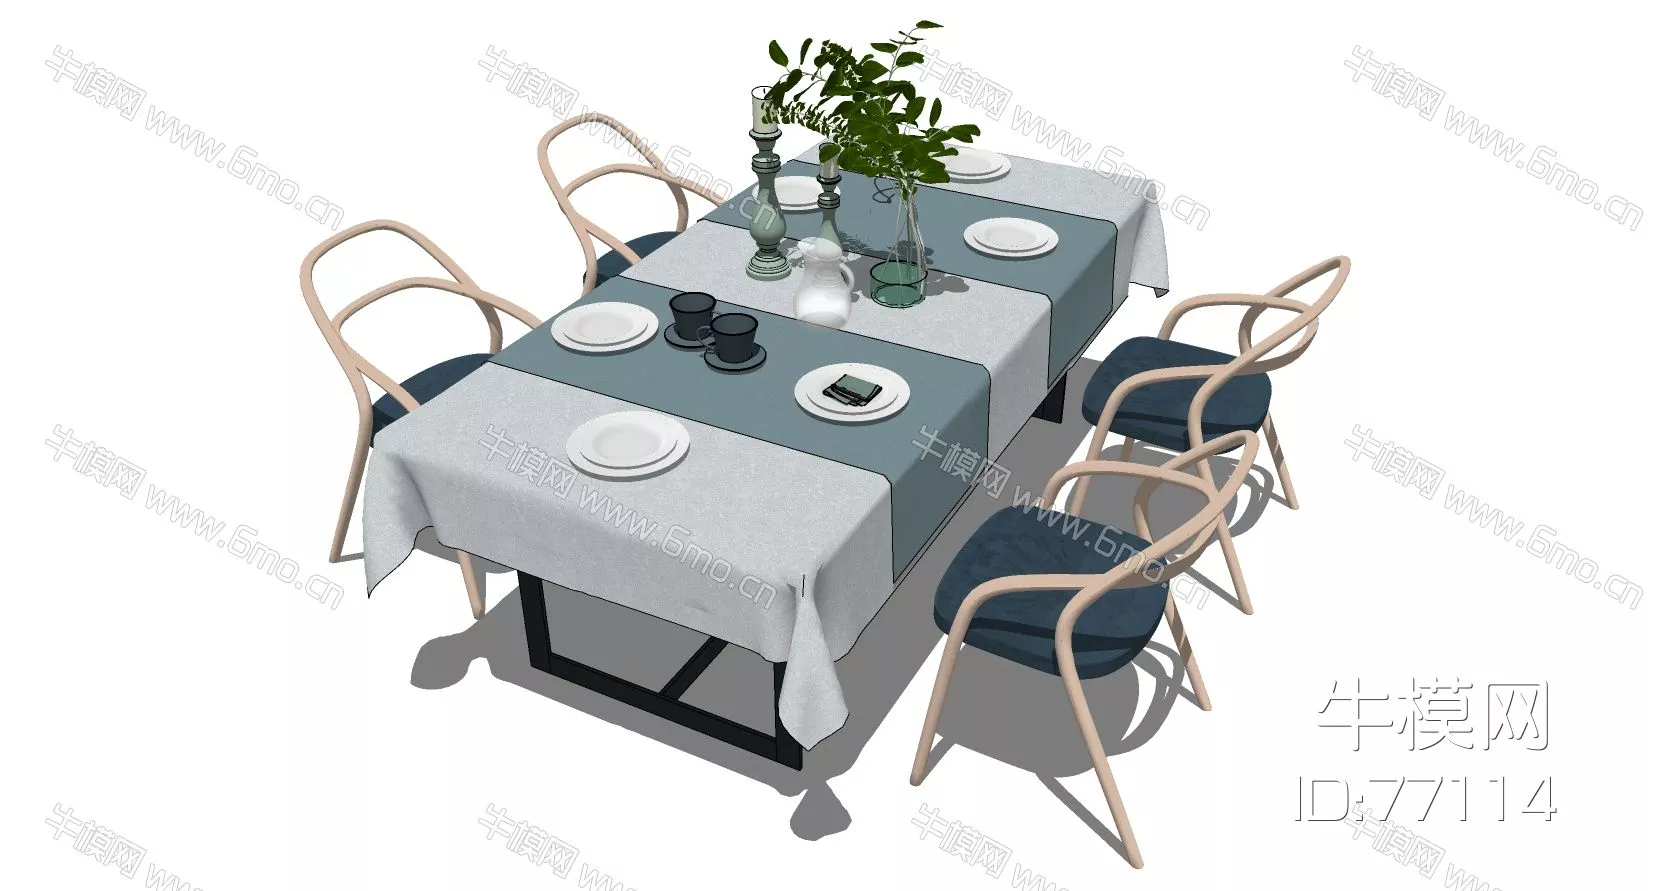 NORDIC DINING TABLE SET - SKETCHUP 3D MODEL - ENSCAPE - 77114